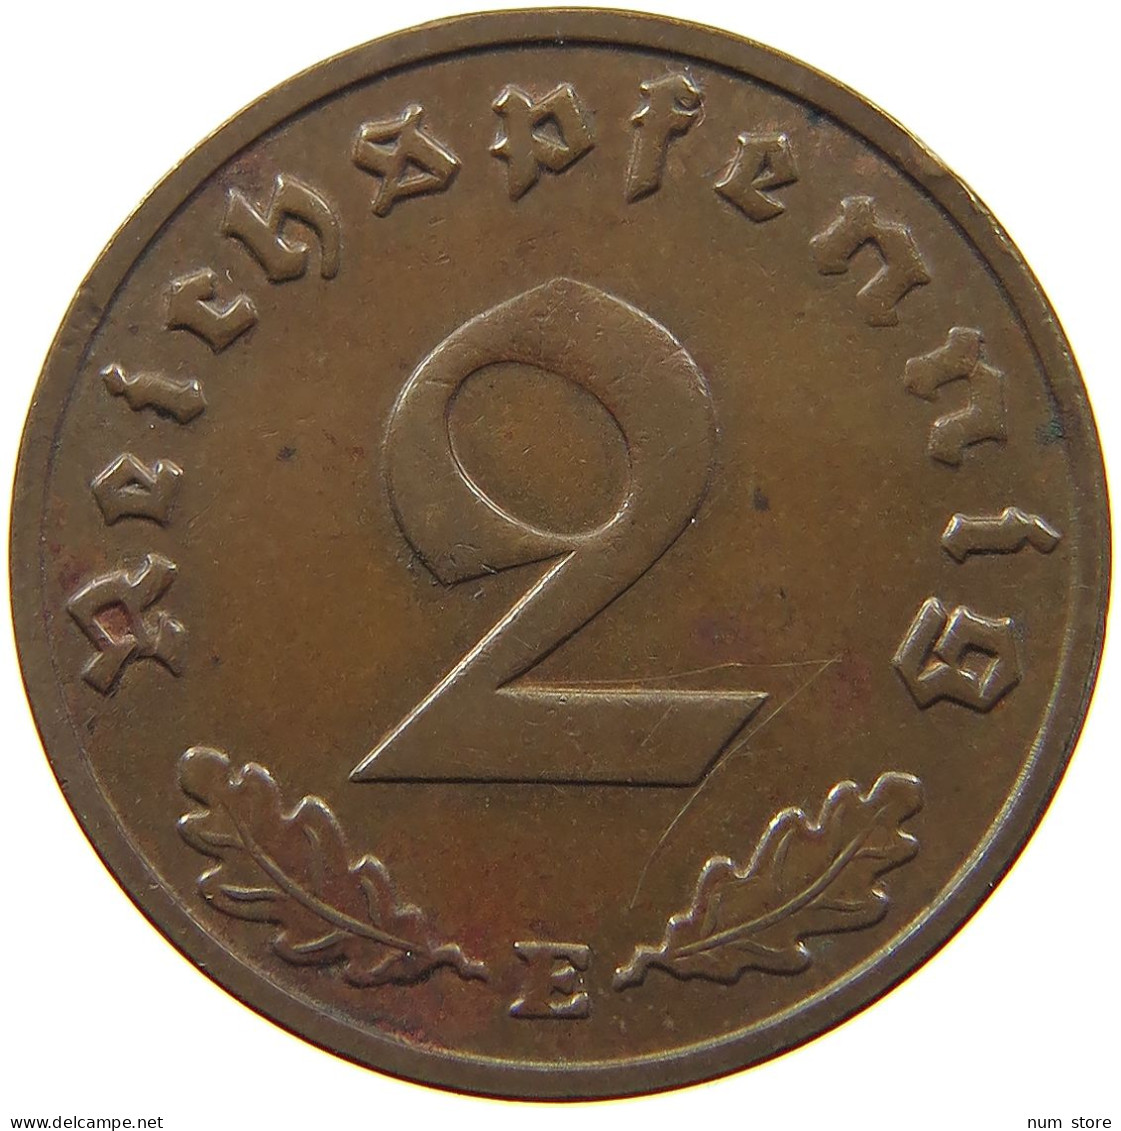 GERMANY 2 PFENNIG 1939 E #a032 0345 - 2 Reichspfennig